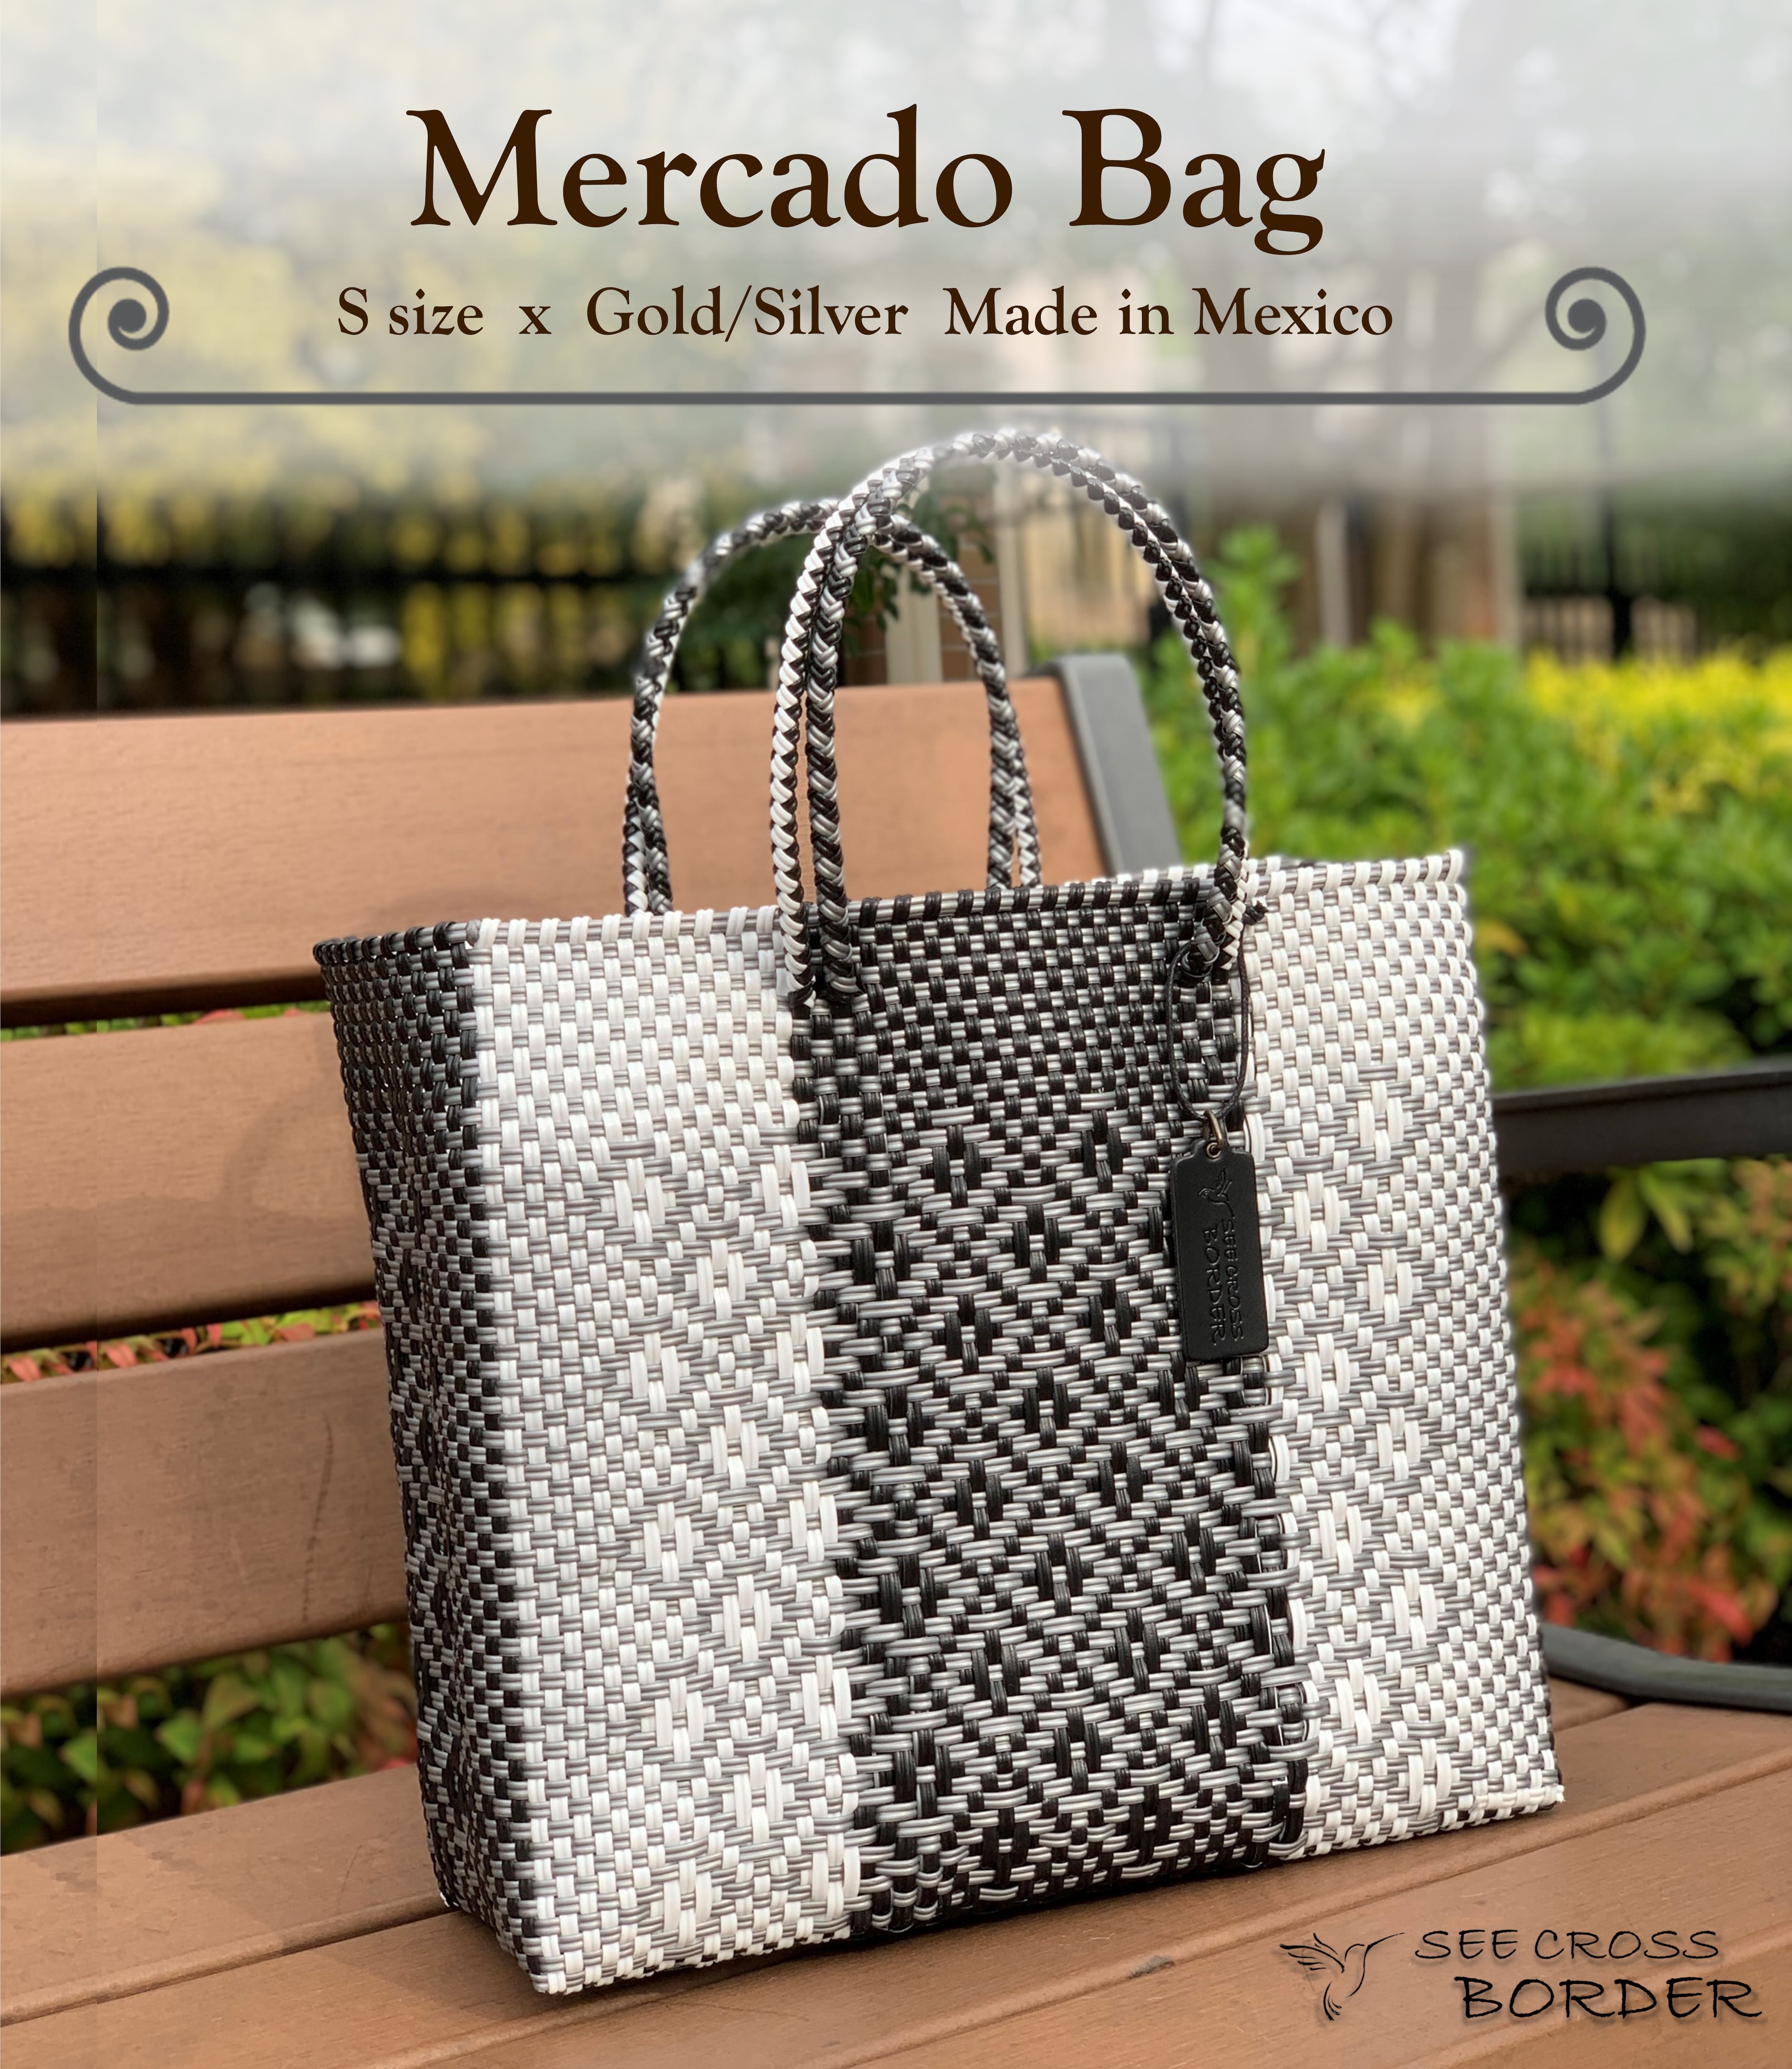 S Mercado Bag (Normal handle) White/Black/Silver | SEE CROSS BORDER  人気のおしゃれメルカドバッグ/職人が作ったハンドメイド品 powered by BASE